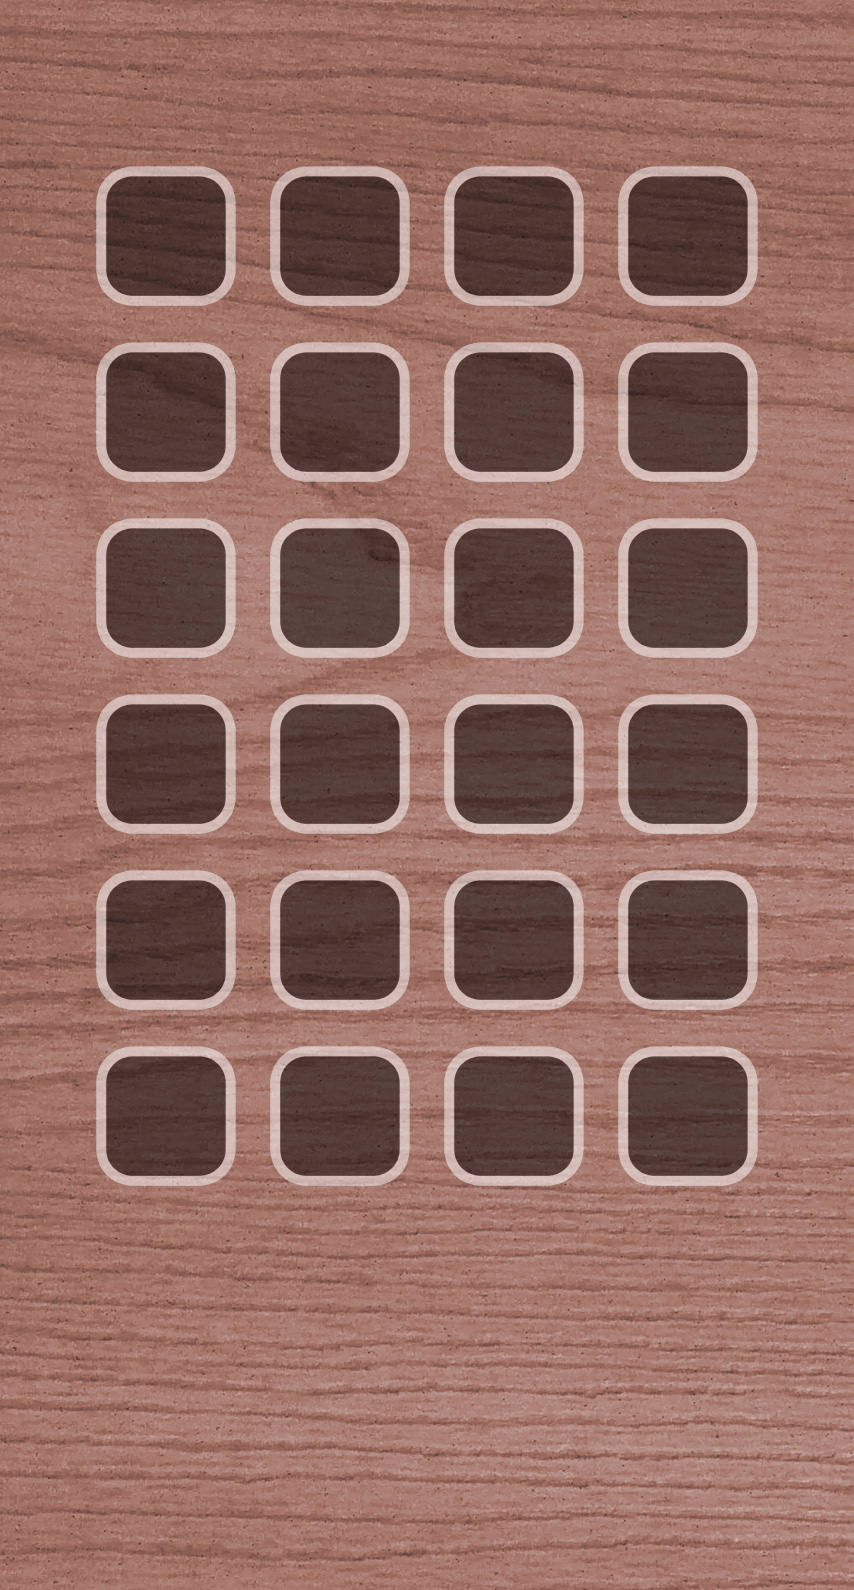 Plate Wood Brown Grain Shelf Wallpaper Sc Iphone6s